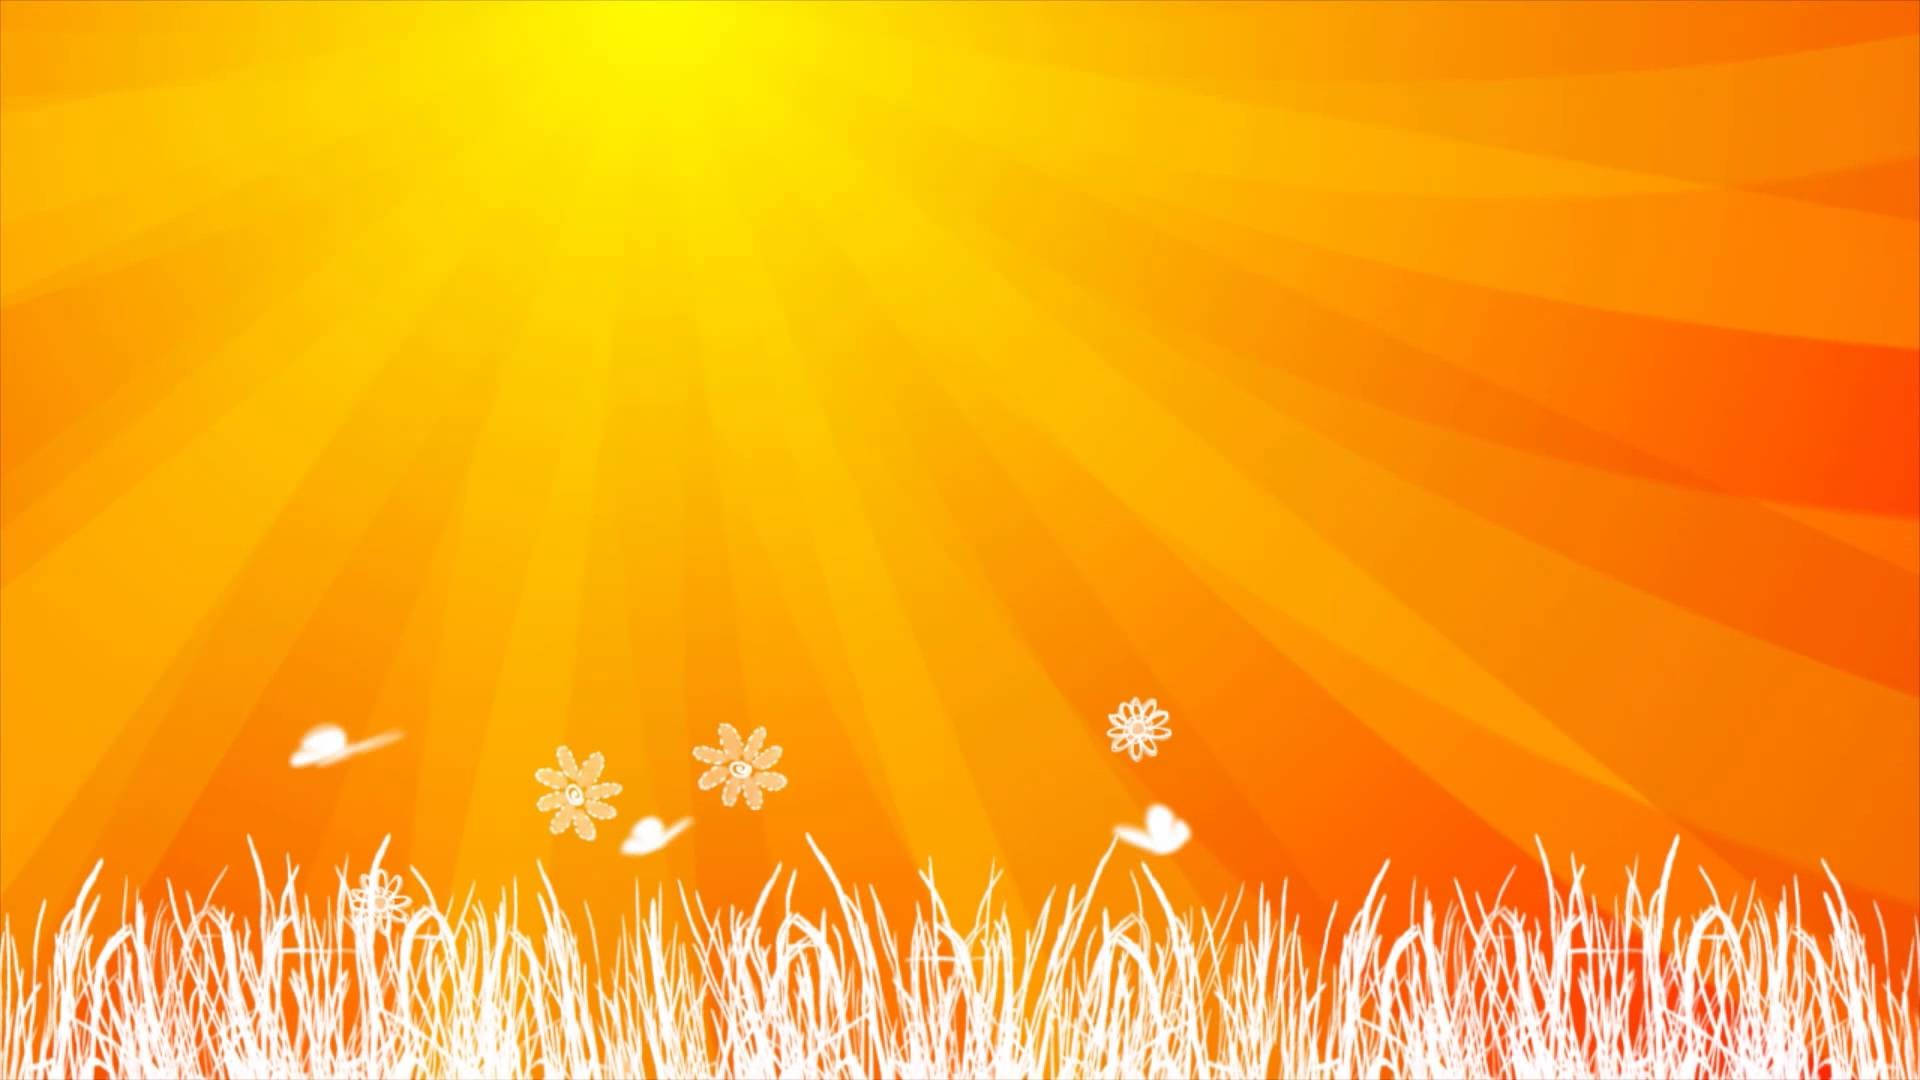 Orange And Yellow Sunlight Rays Background